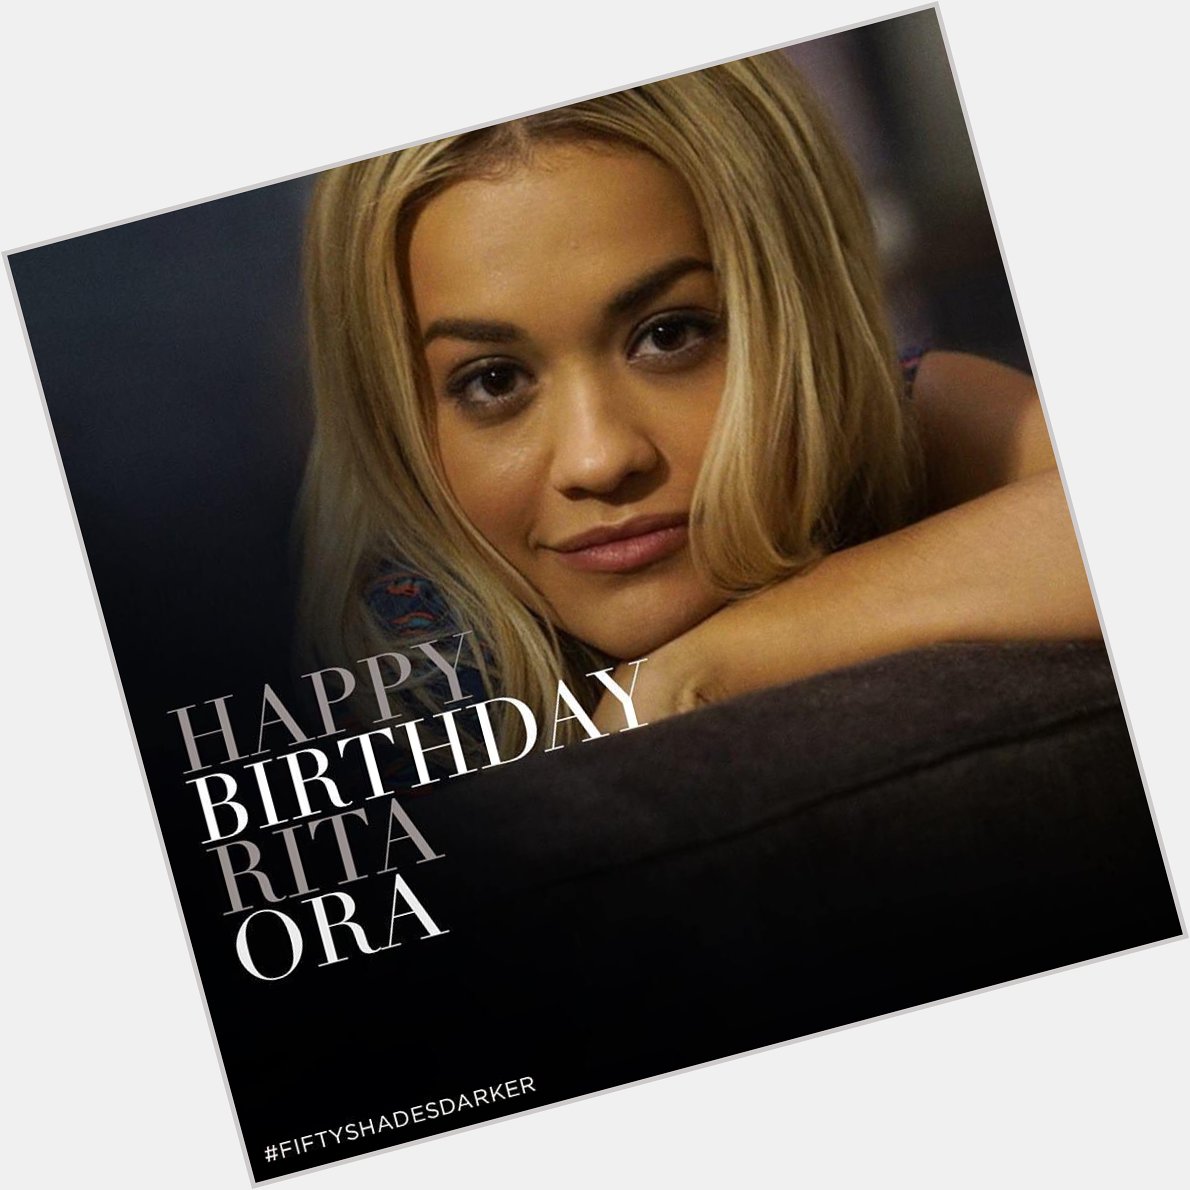 Happy birthday Rita Ora!  